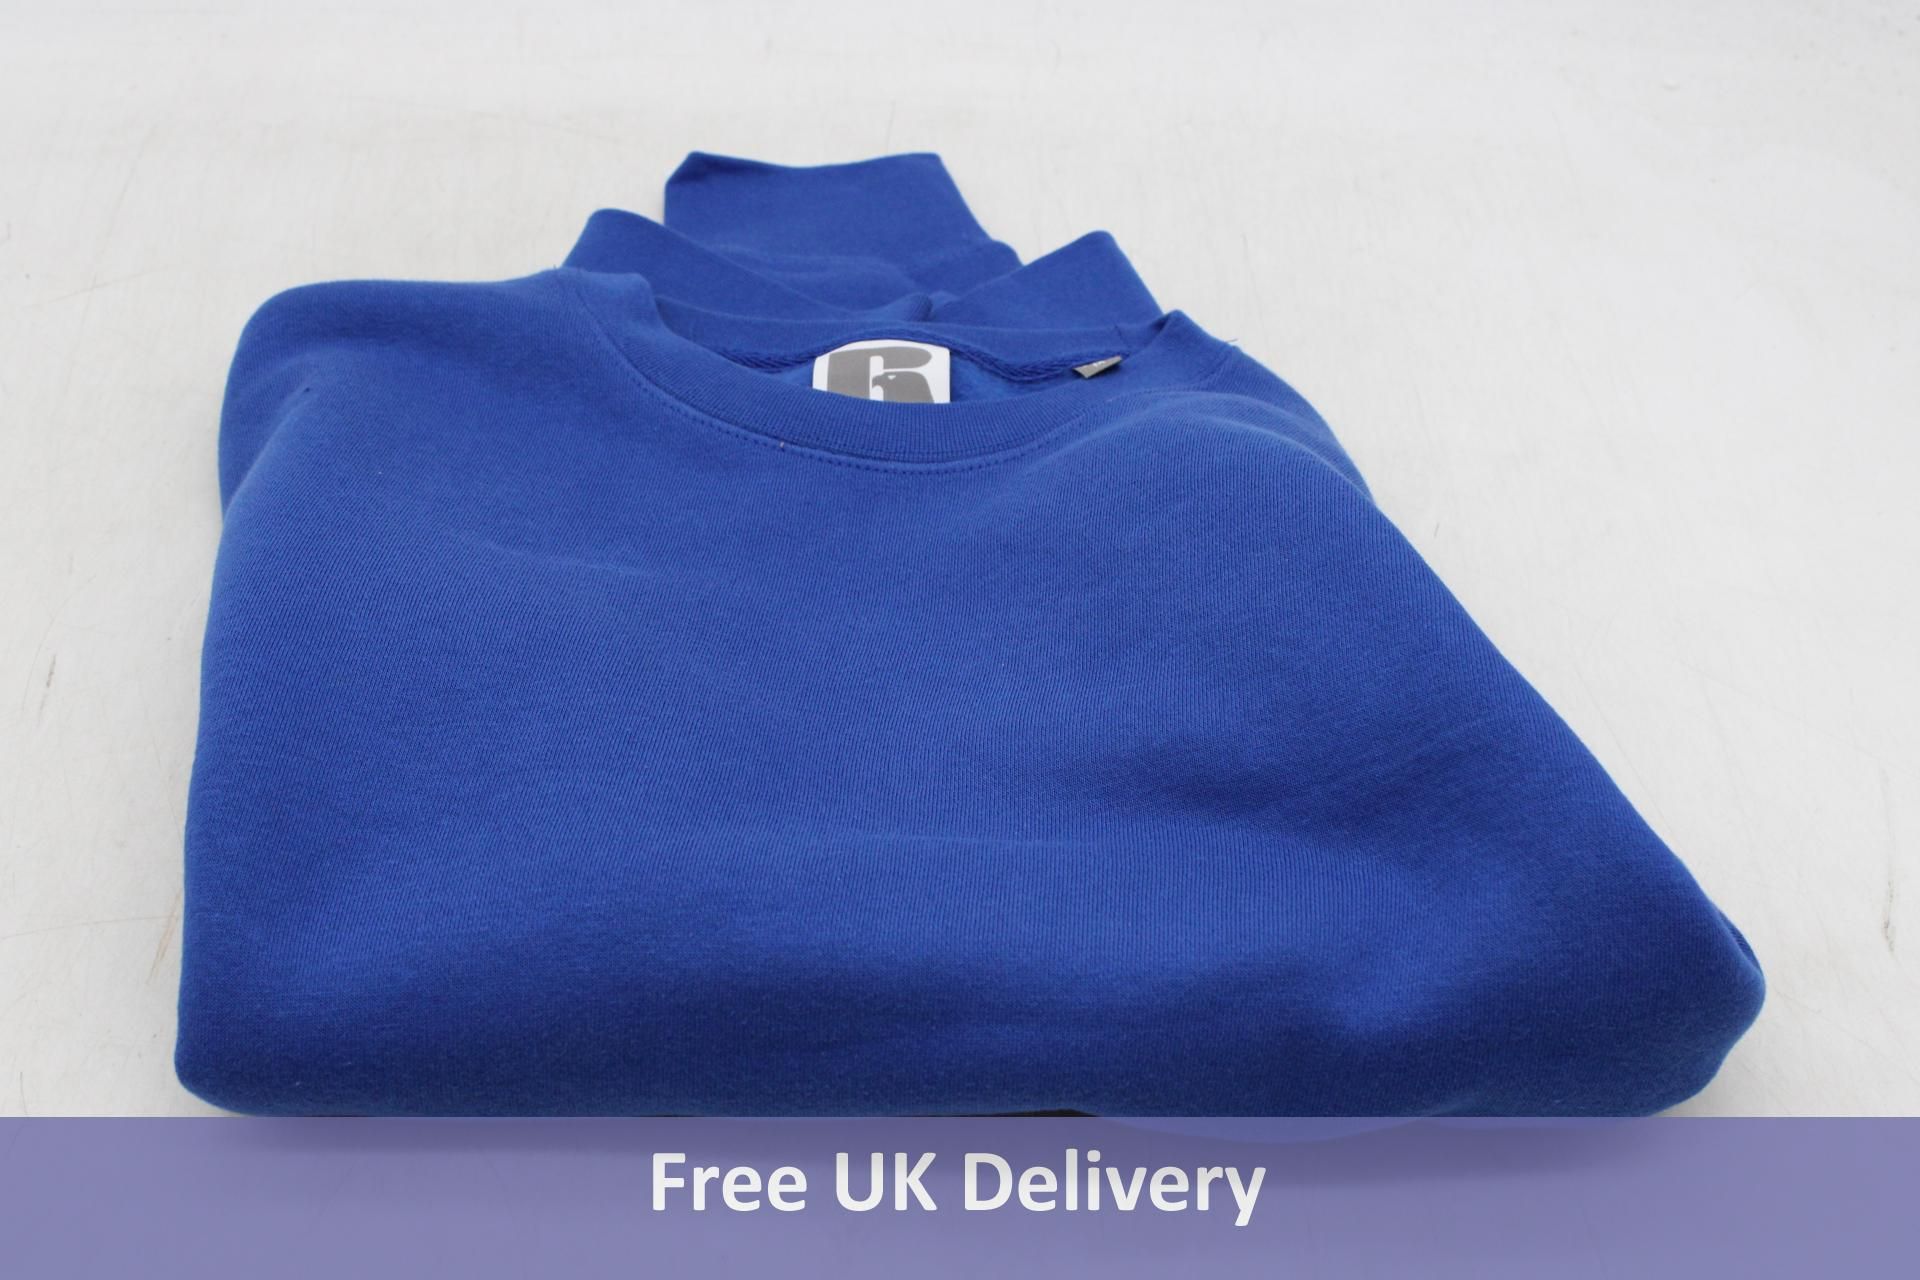 Three Russell Men's The Authentic Sweatshirt, Royal Blue, Medium